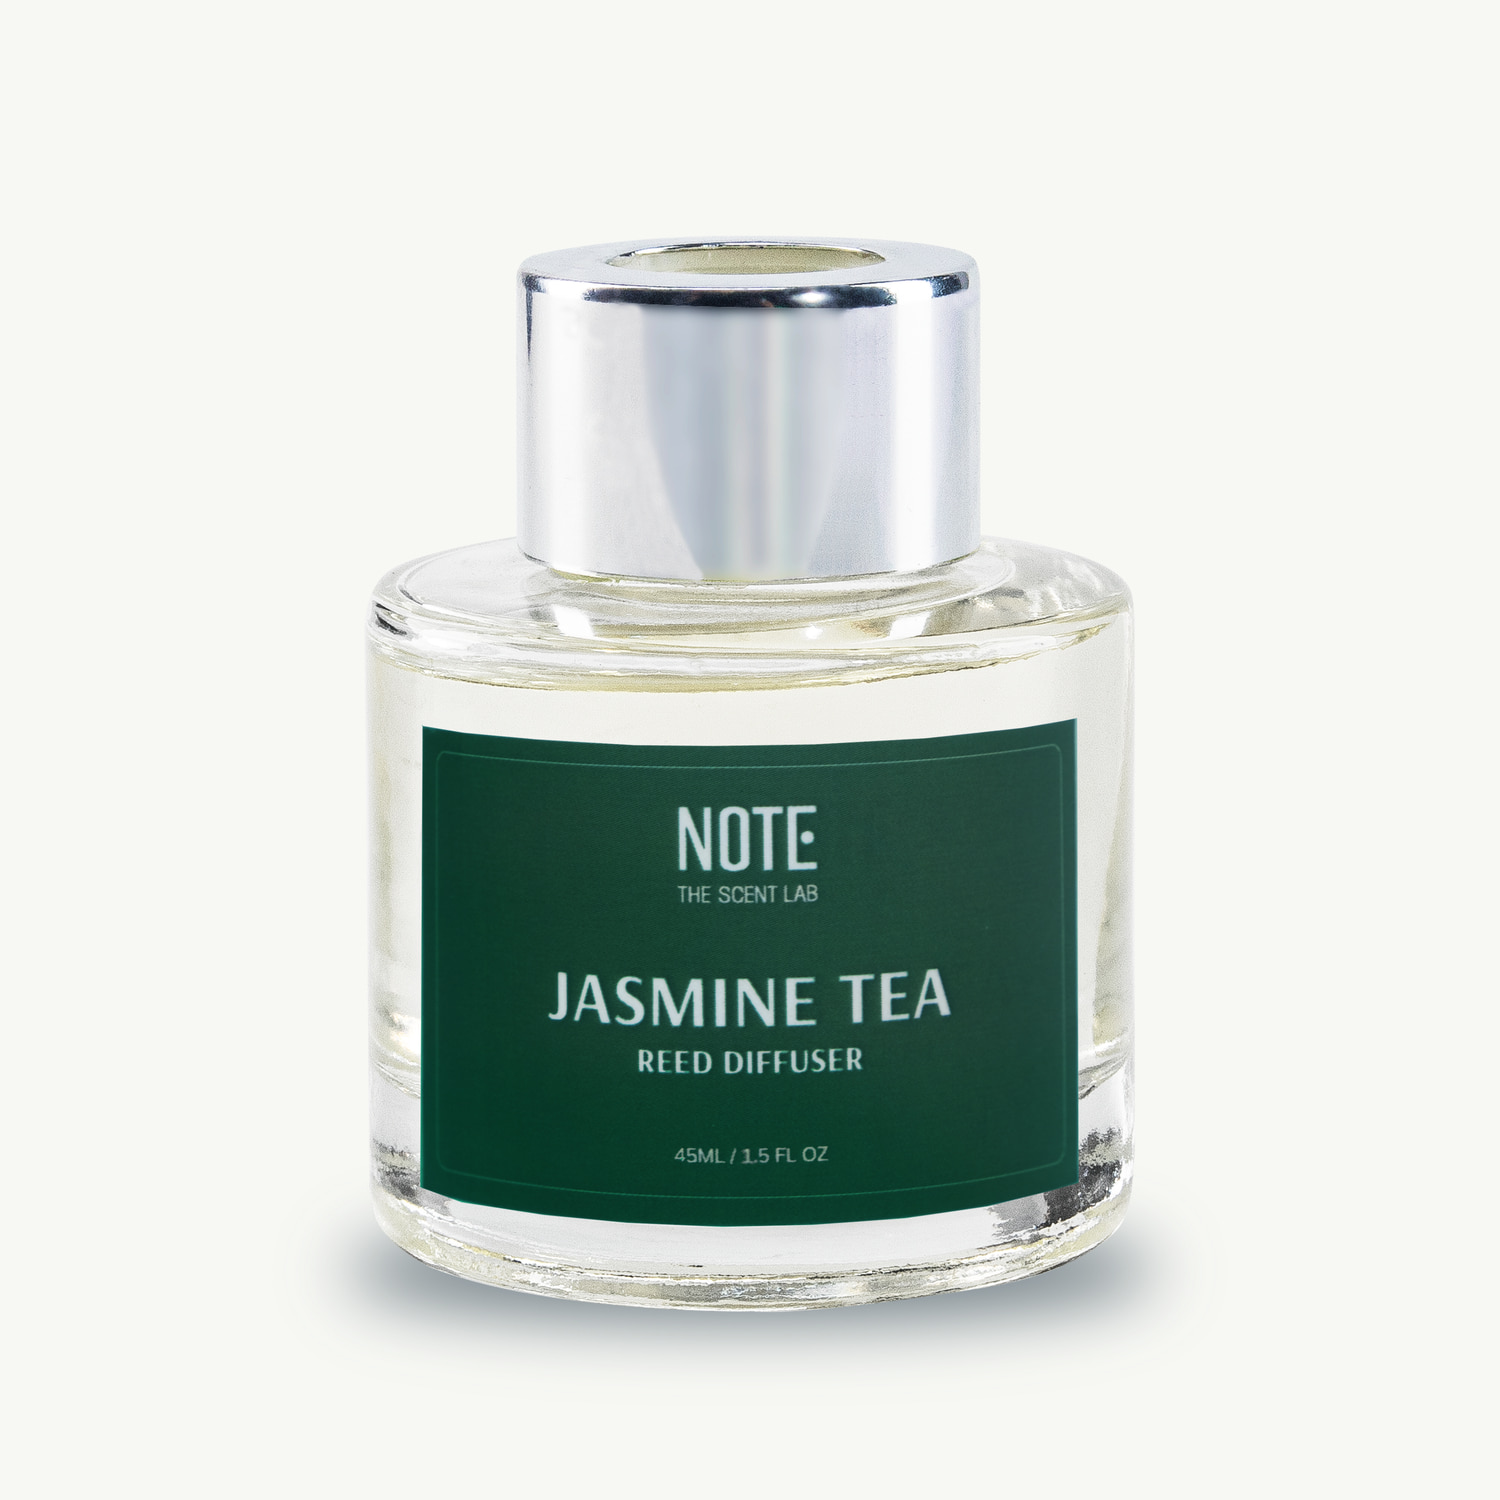 Khuếch tán hương Jasmine Tea 45ml của NOTE - The Scent Lab